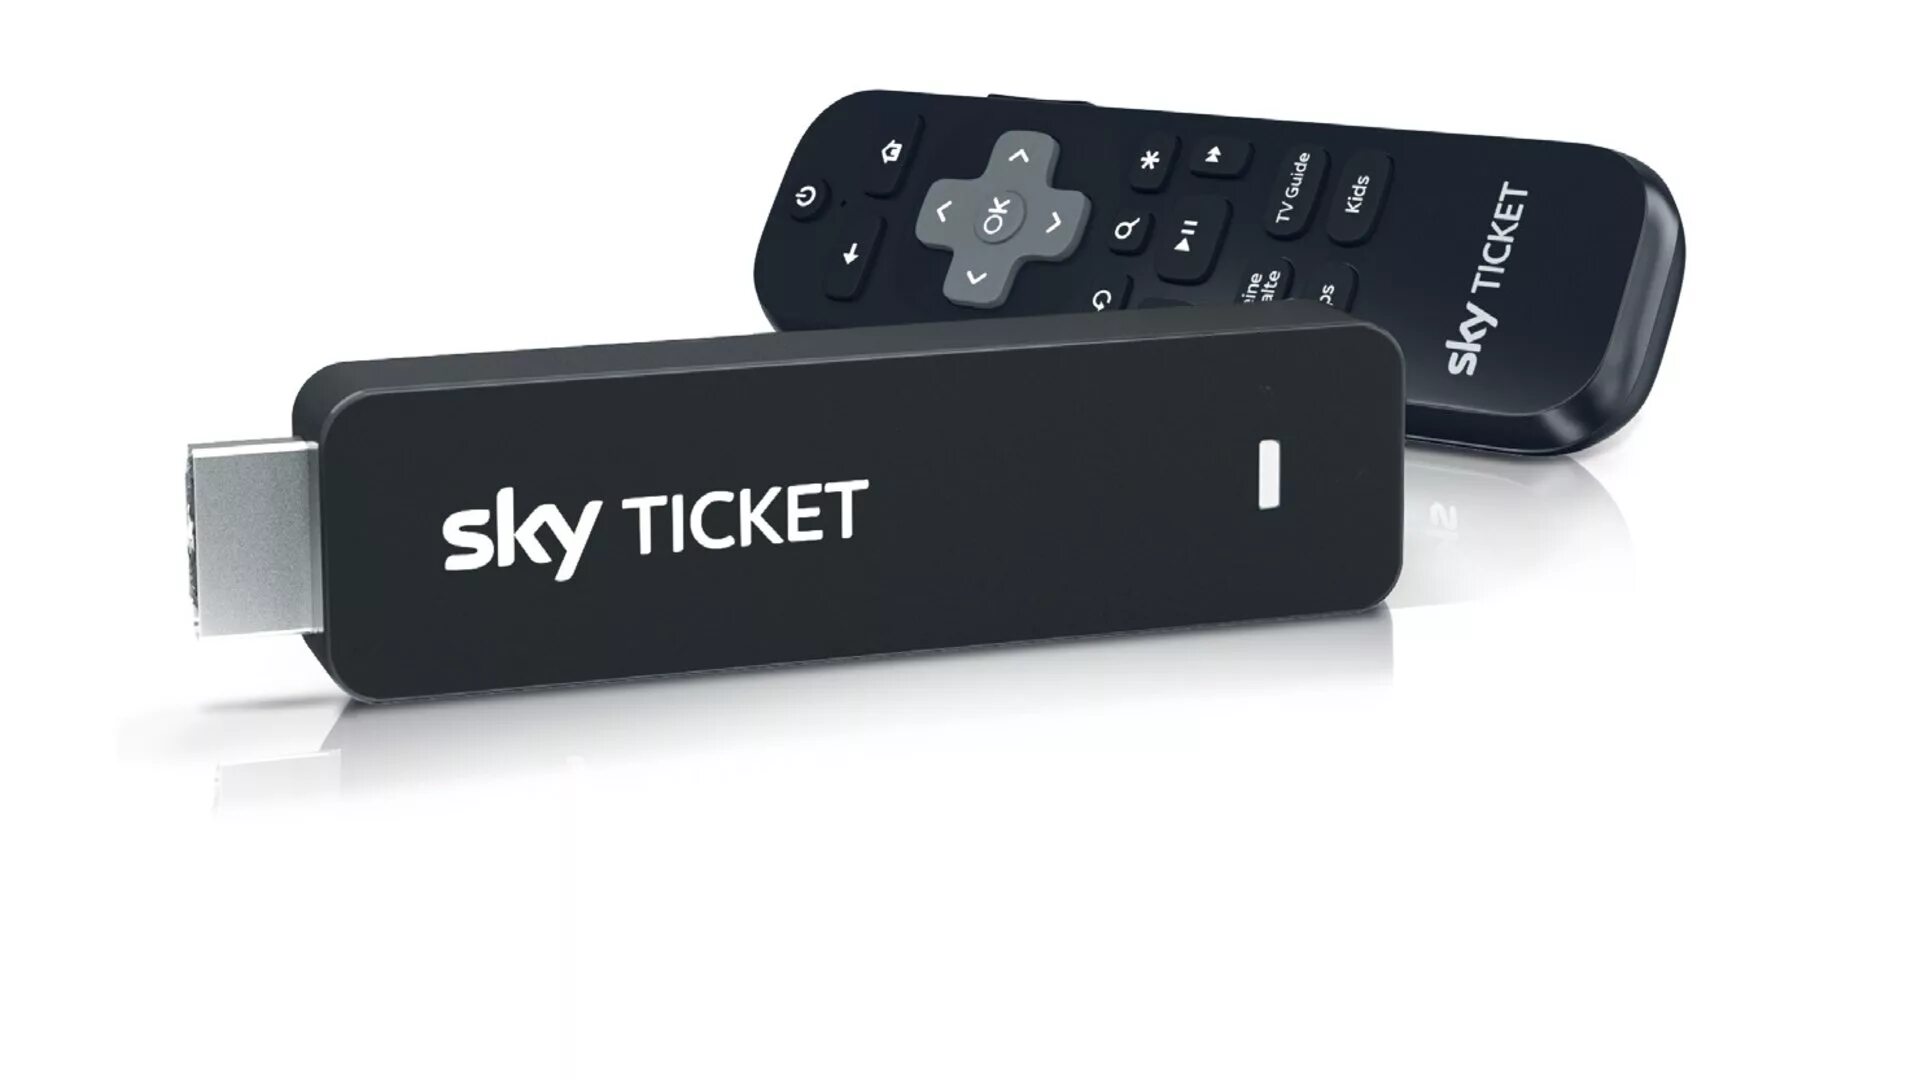 Sky ticket. Rombica TV Stick, 16гб [XSM-tv03]. Hi725 TV Stick. Флешка Скай. Ug802 TV Stick.